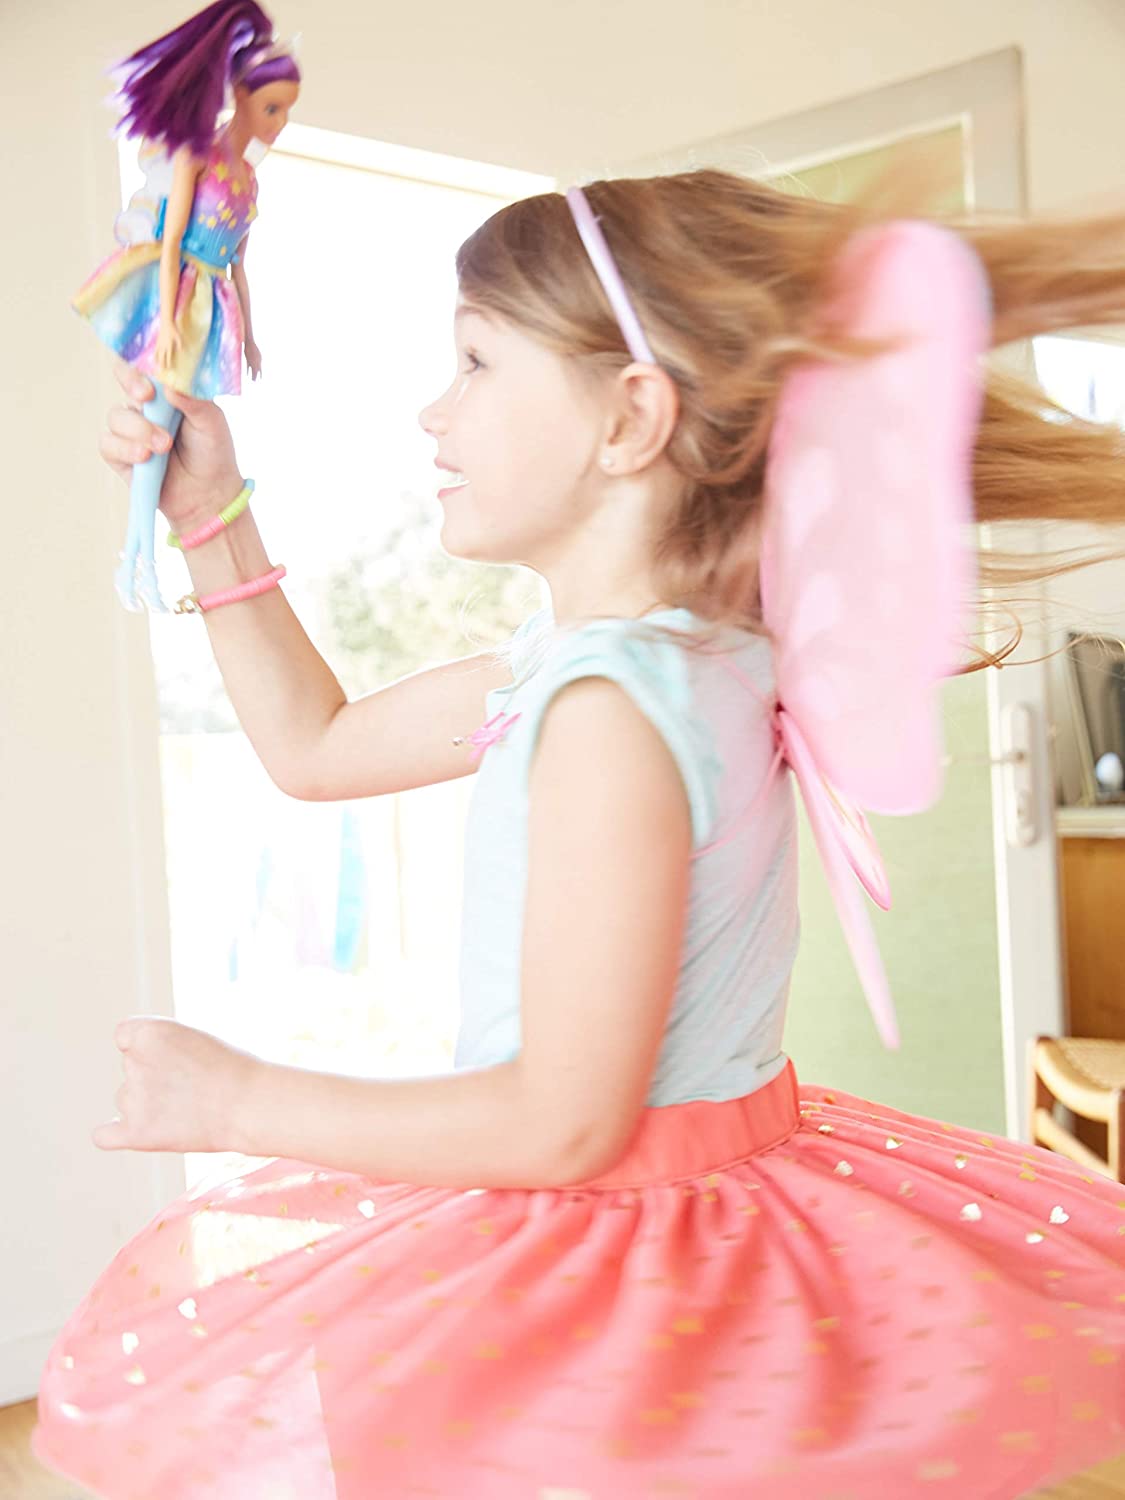 Barbie Dreamtopia Rainbow Cove Fairy Doll